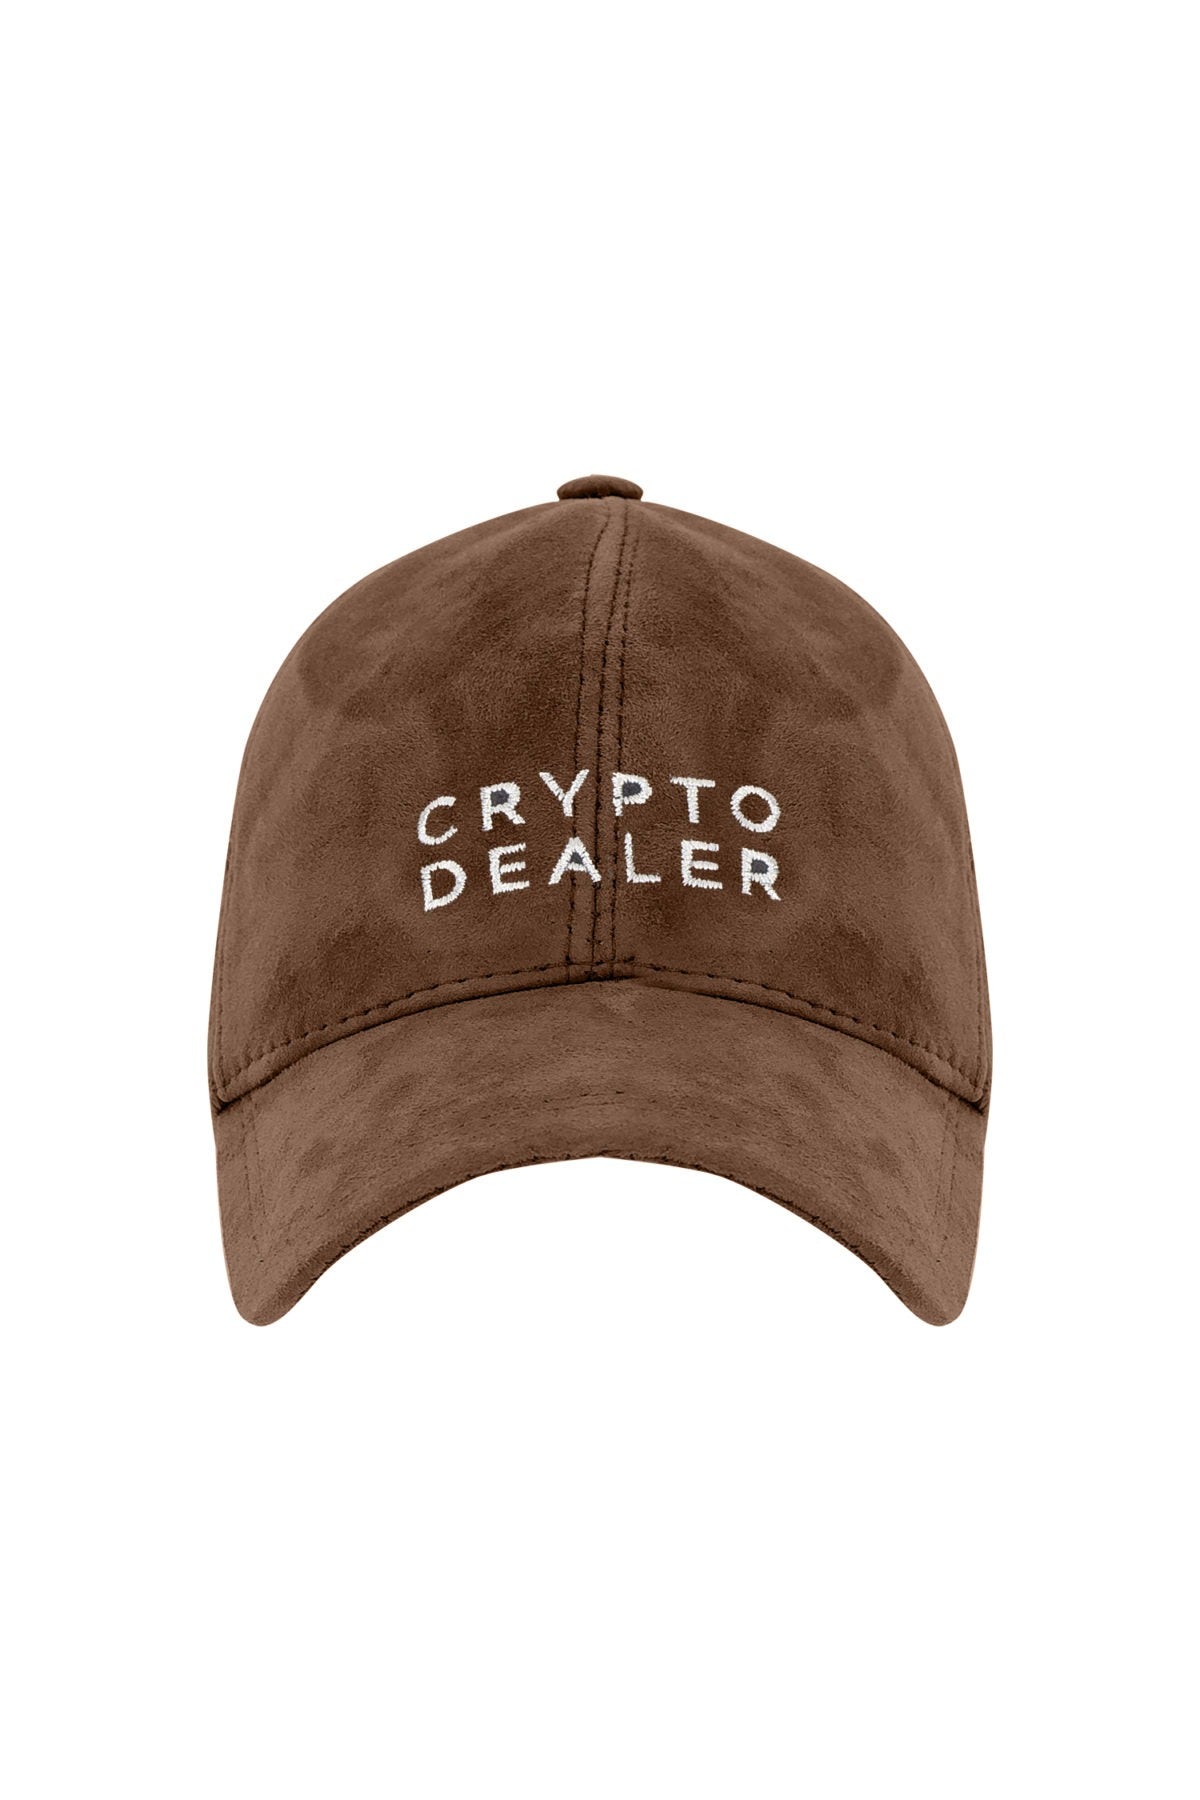 Crypto Dealer - Brown